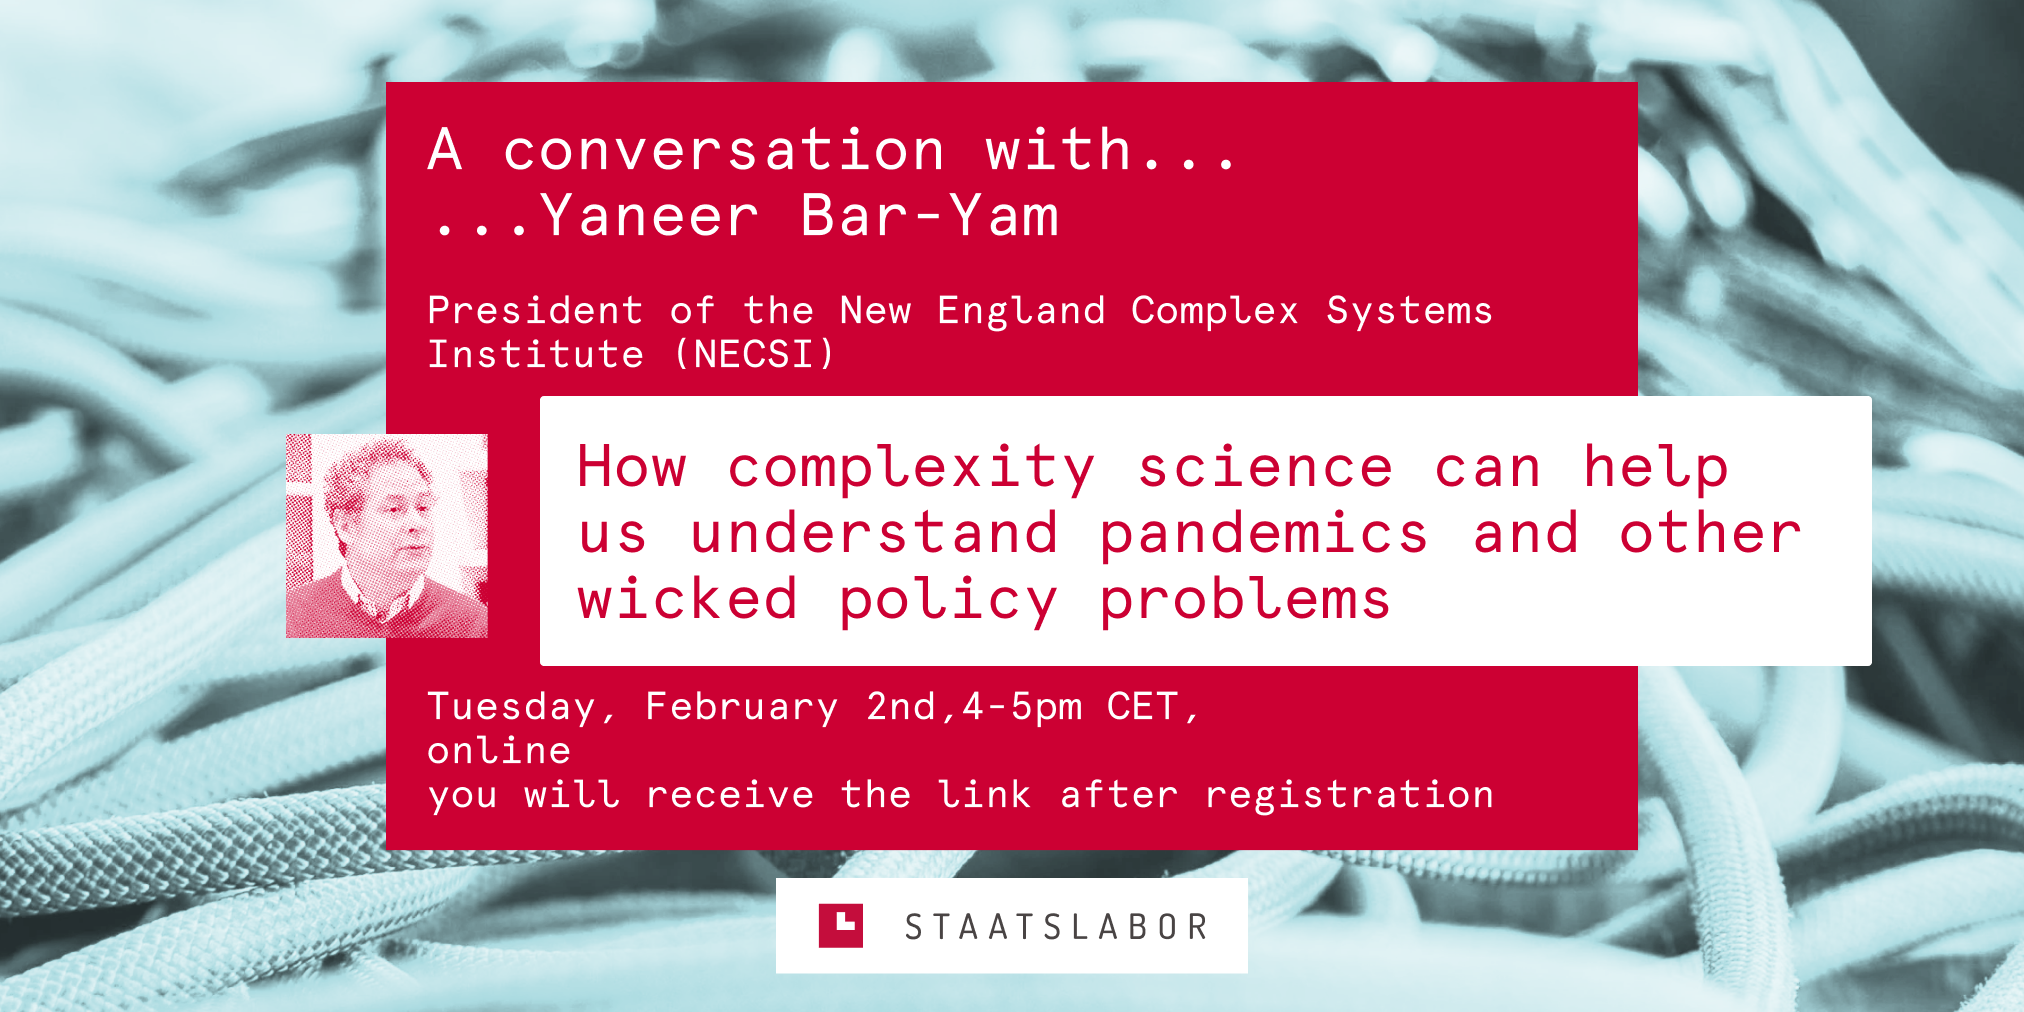 A conversation with Yaneer Bar-Yam